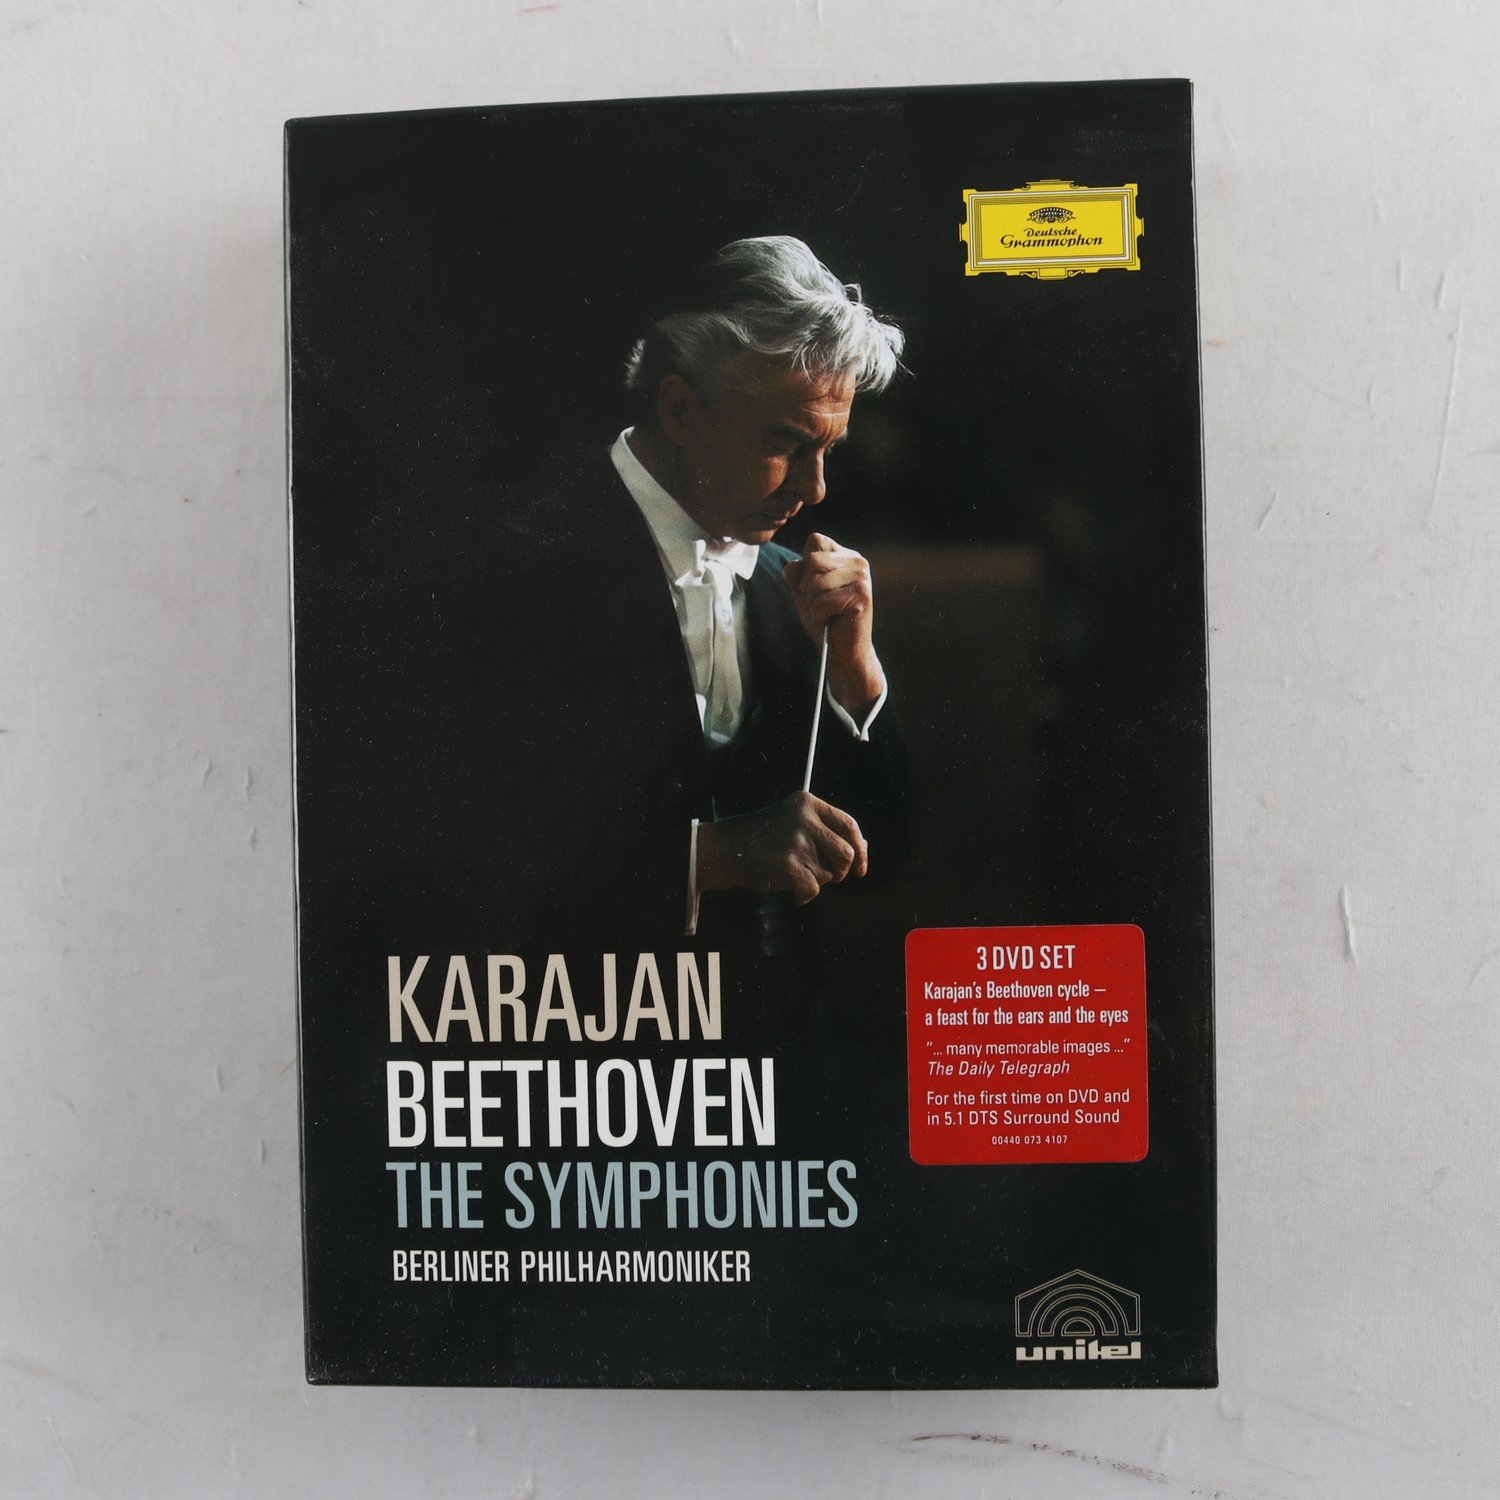 DVD Beethoven, Herbet Von Karajan, The Symphonies